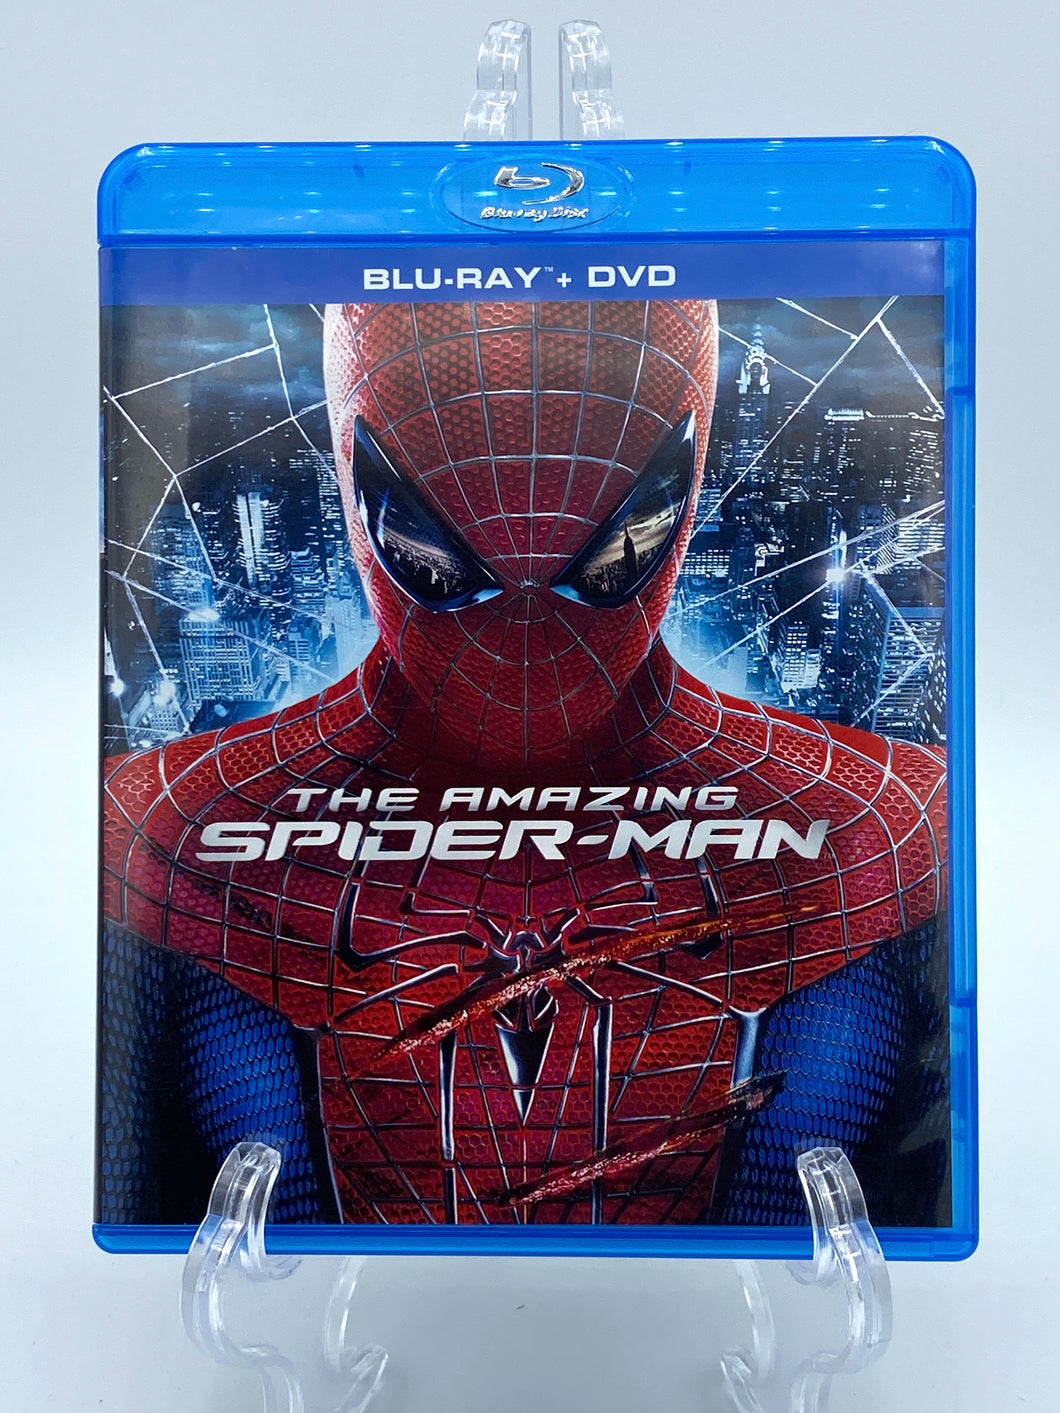 The Amazing Spider-Man 1 & 2 (Blu-Ray / DVD Combo)